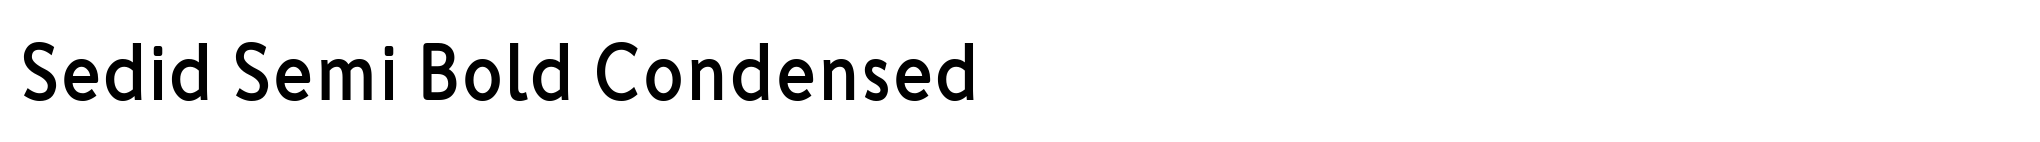 Sedid Semi Bold Condensed image